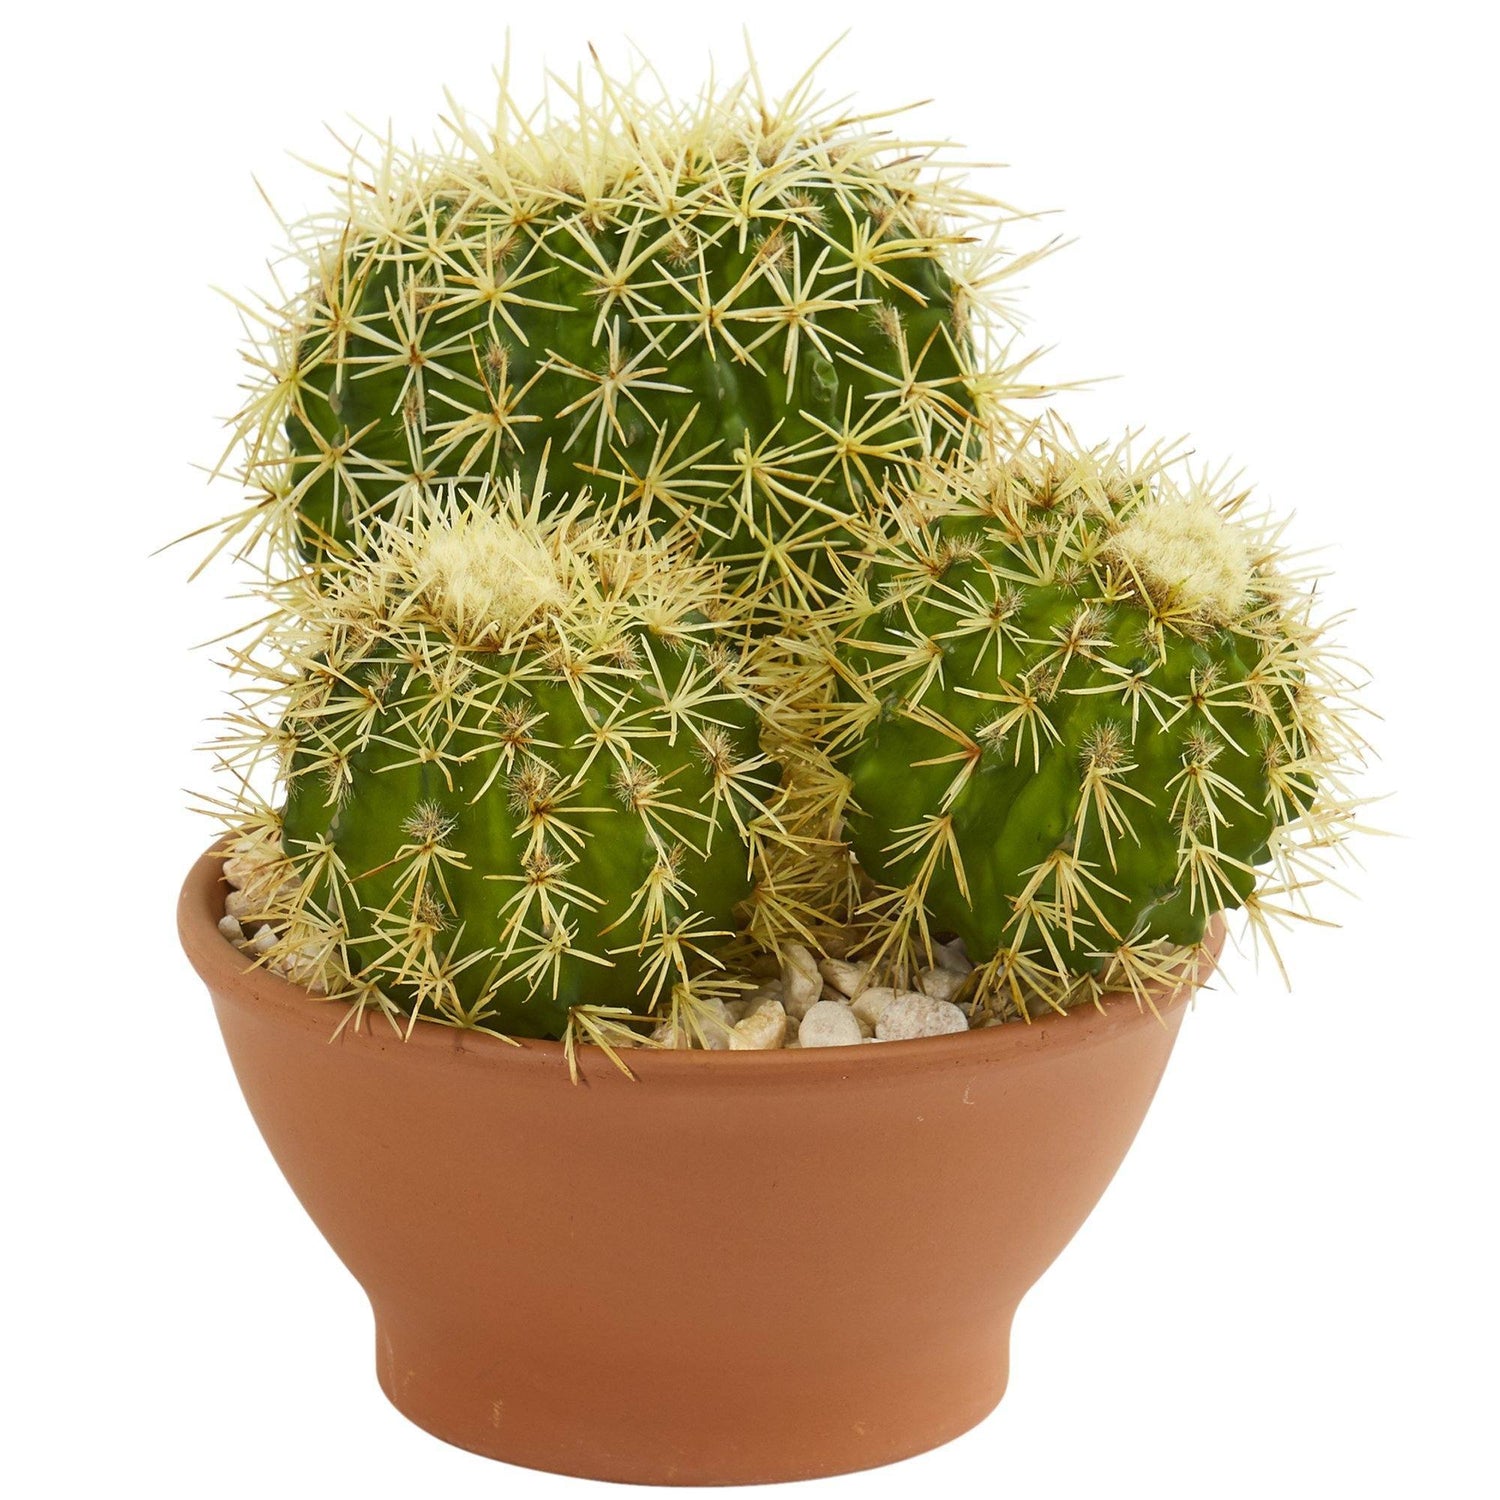 Cactus Garden Artificial Plant in Decorative Planter